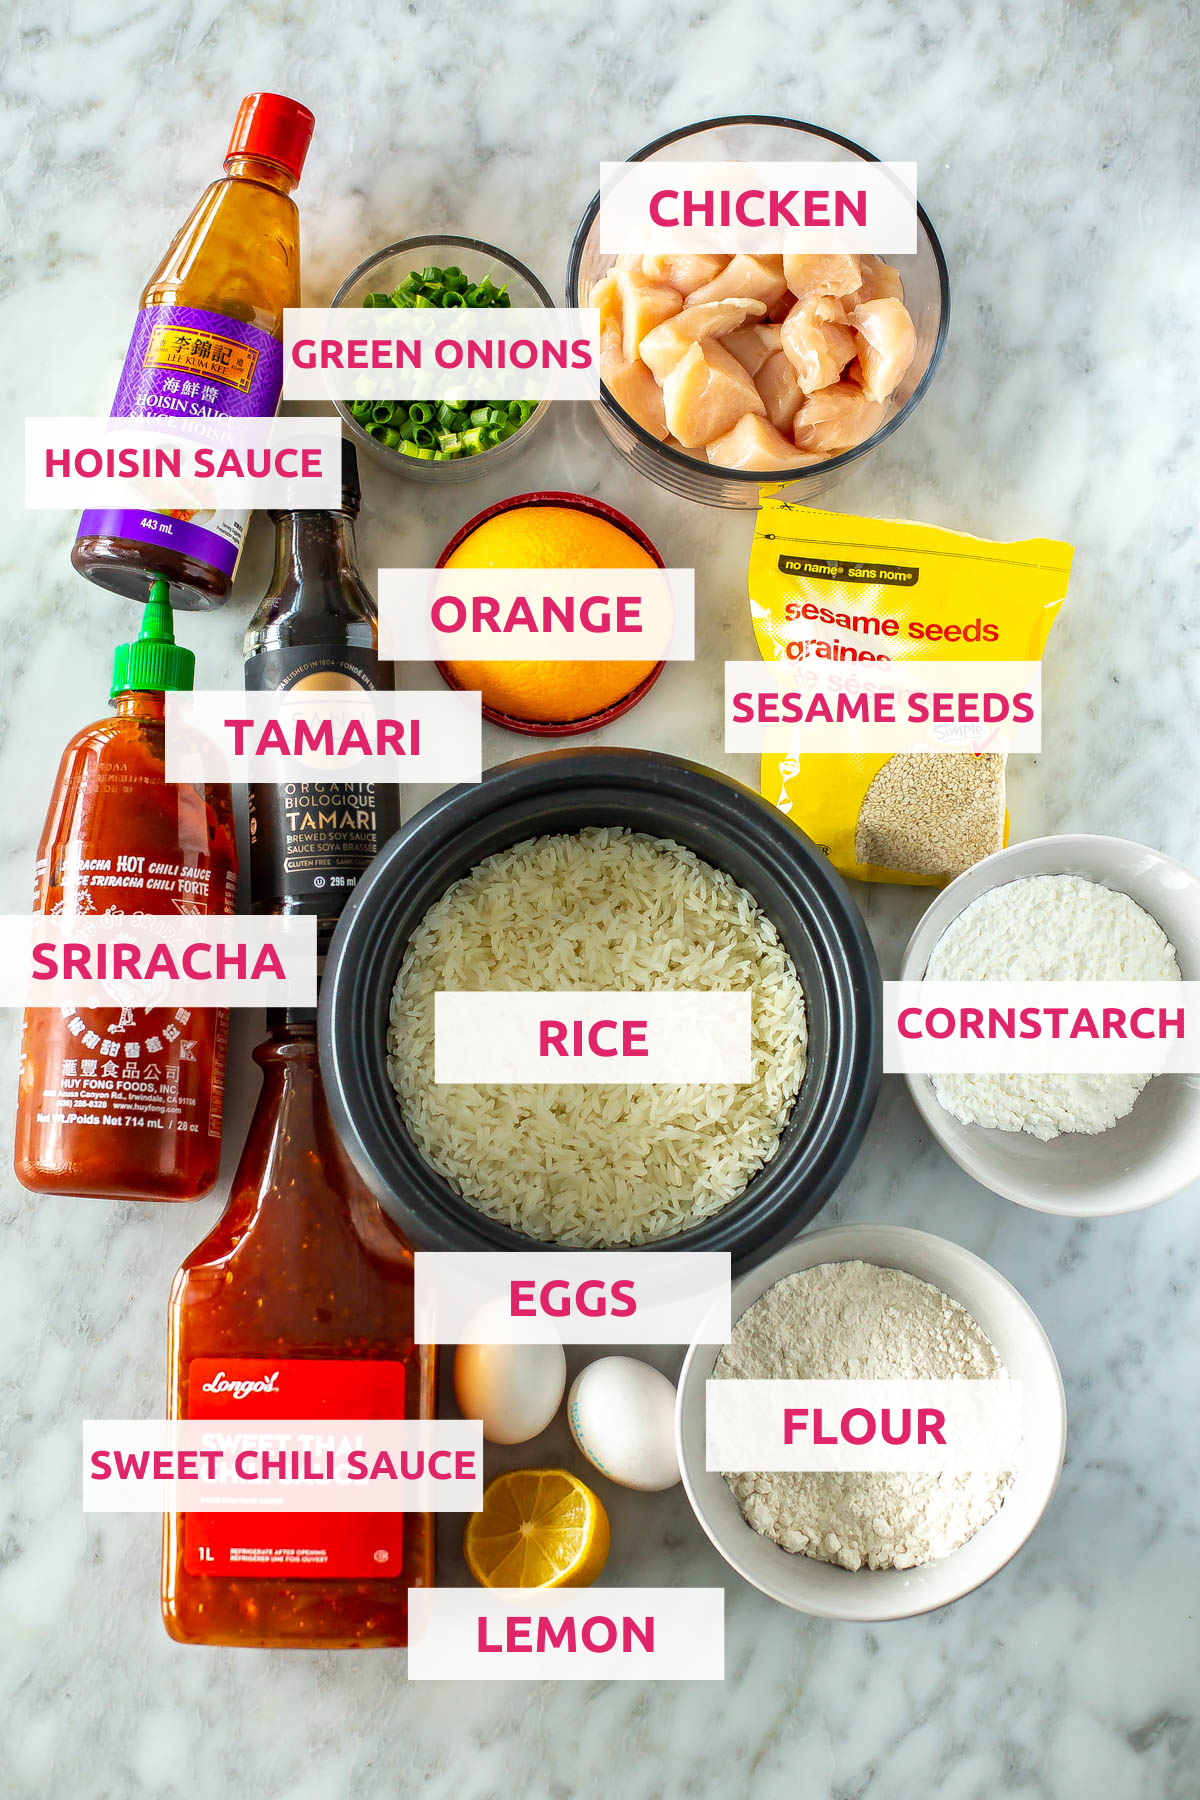 Ingredients for mandarin chicken: hoisin sauce, green onions, chicken, tamari, orange, sesame seeds, sriracha, rice, cornstarch, flour, eggs, lemon, and sweet chili sauce.